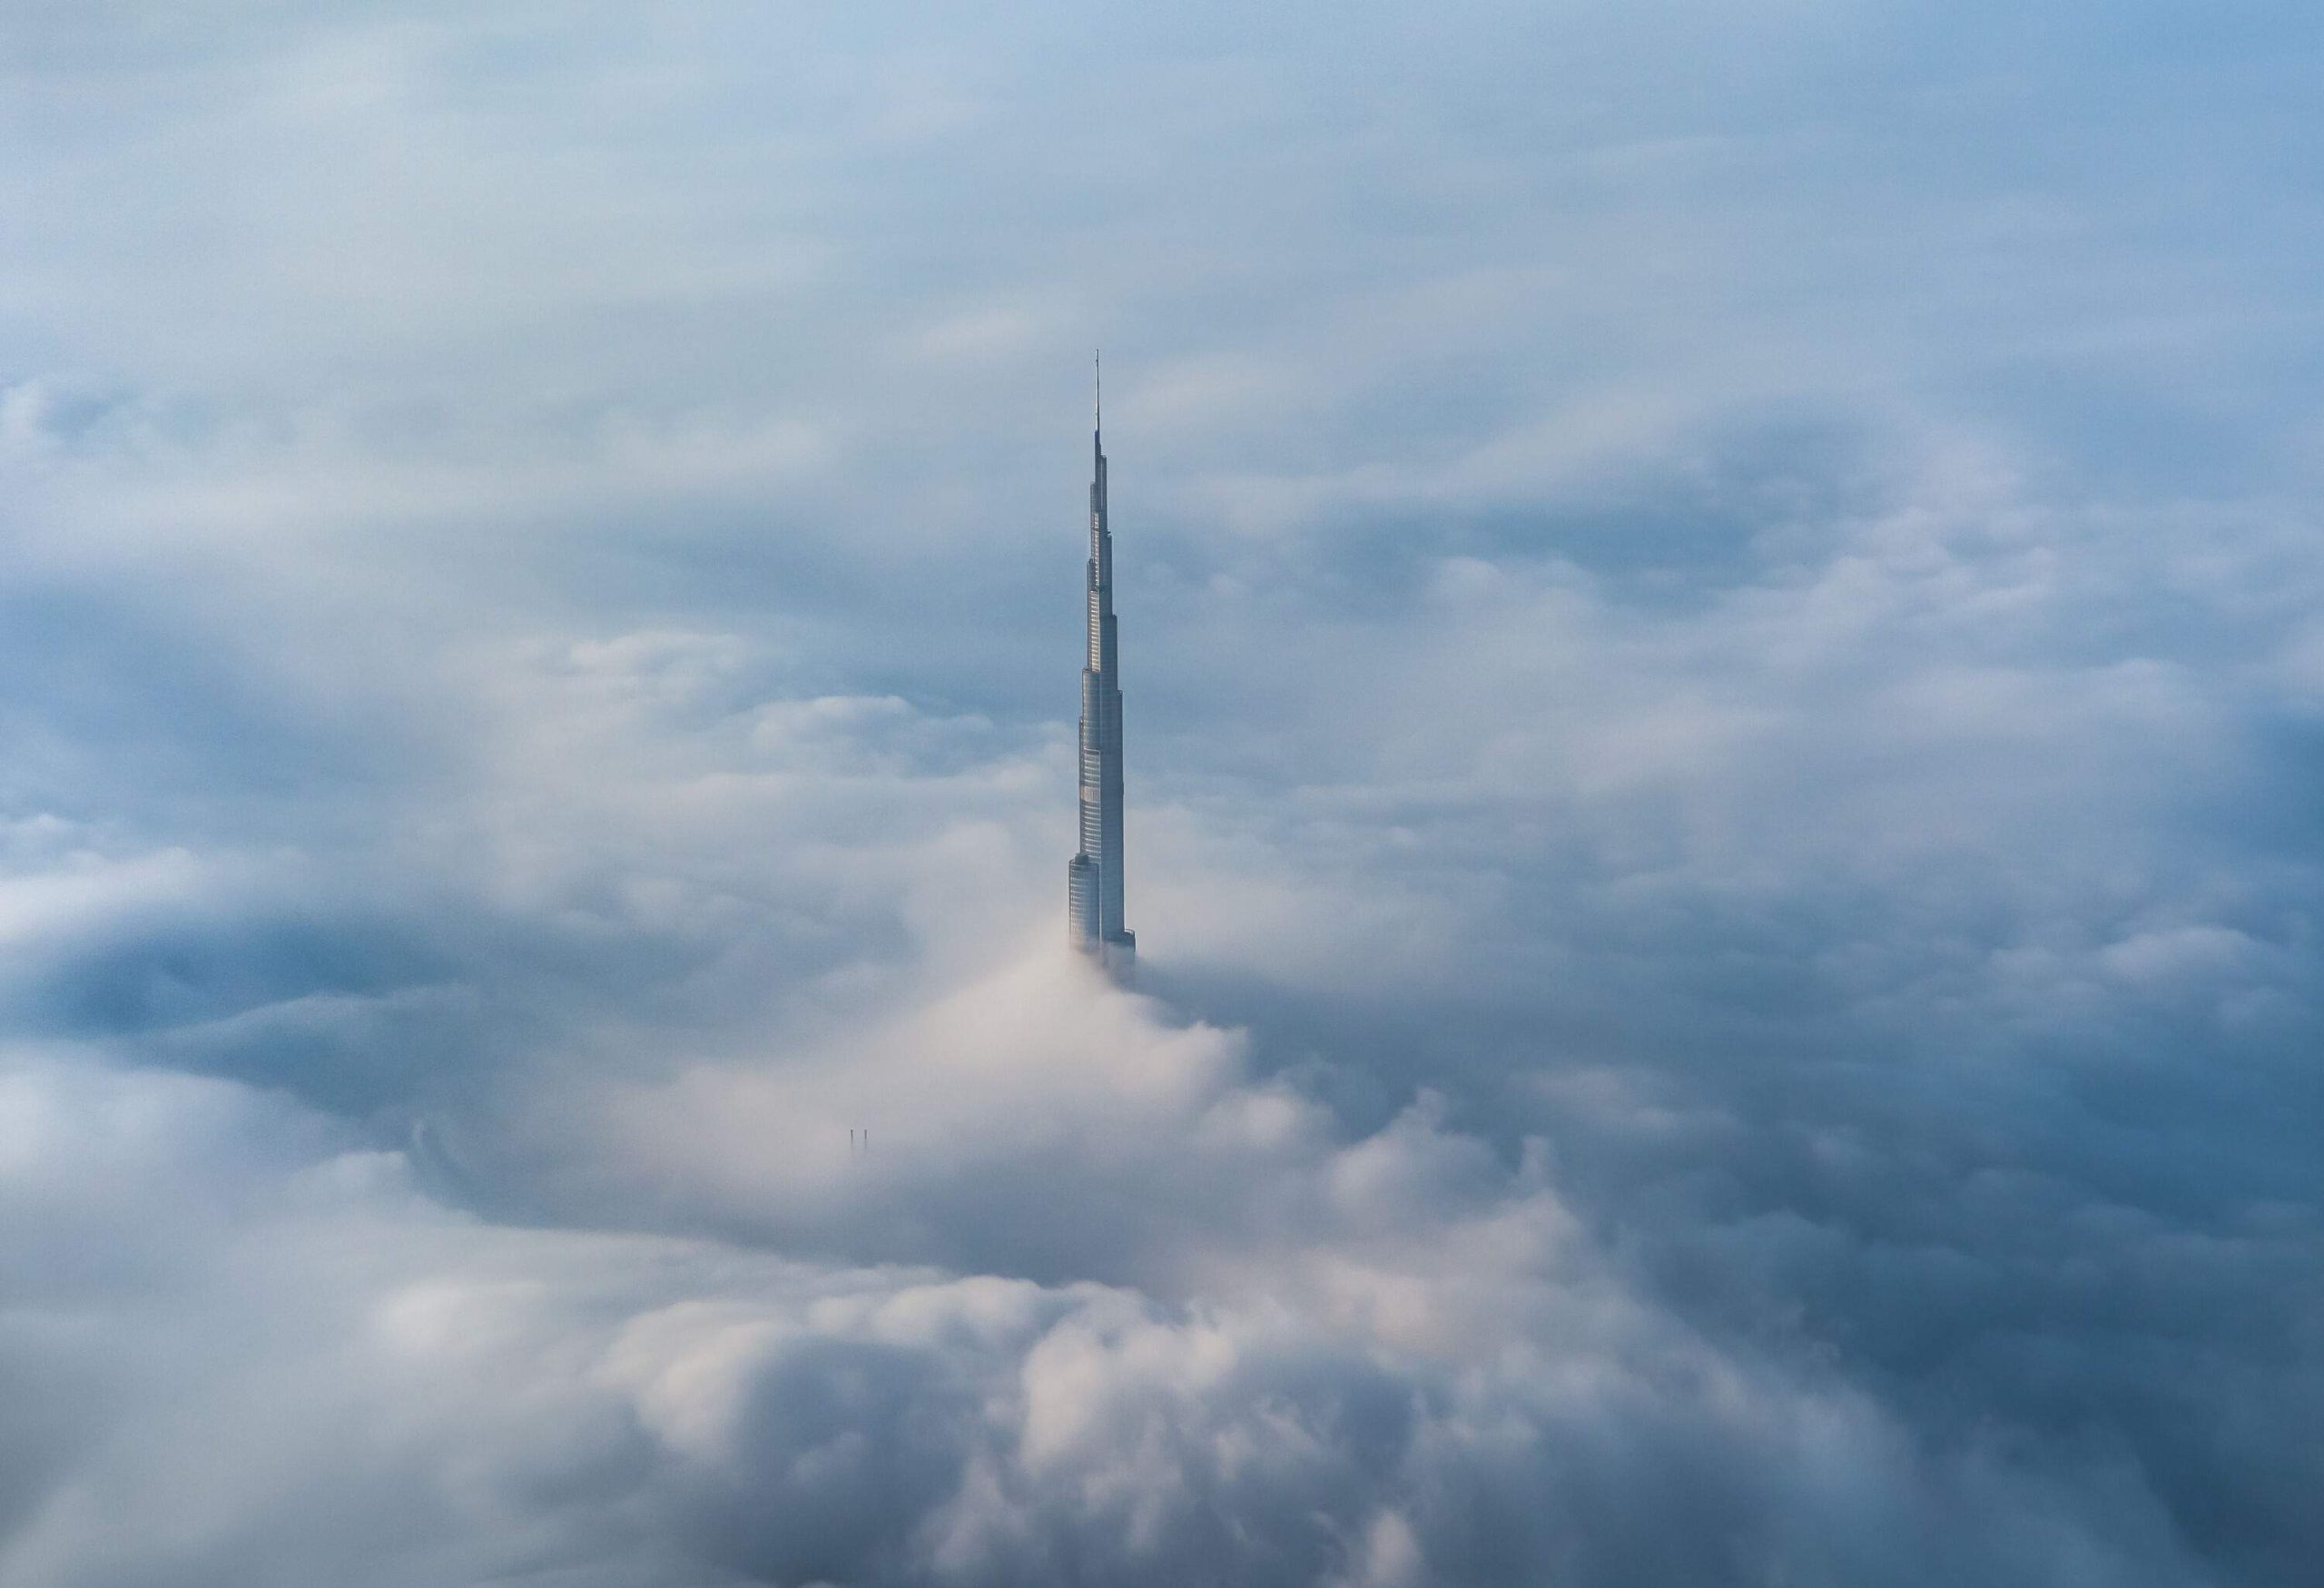 The iconic Burj Khalifa rising through the fog that has engulfed the city.